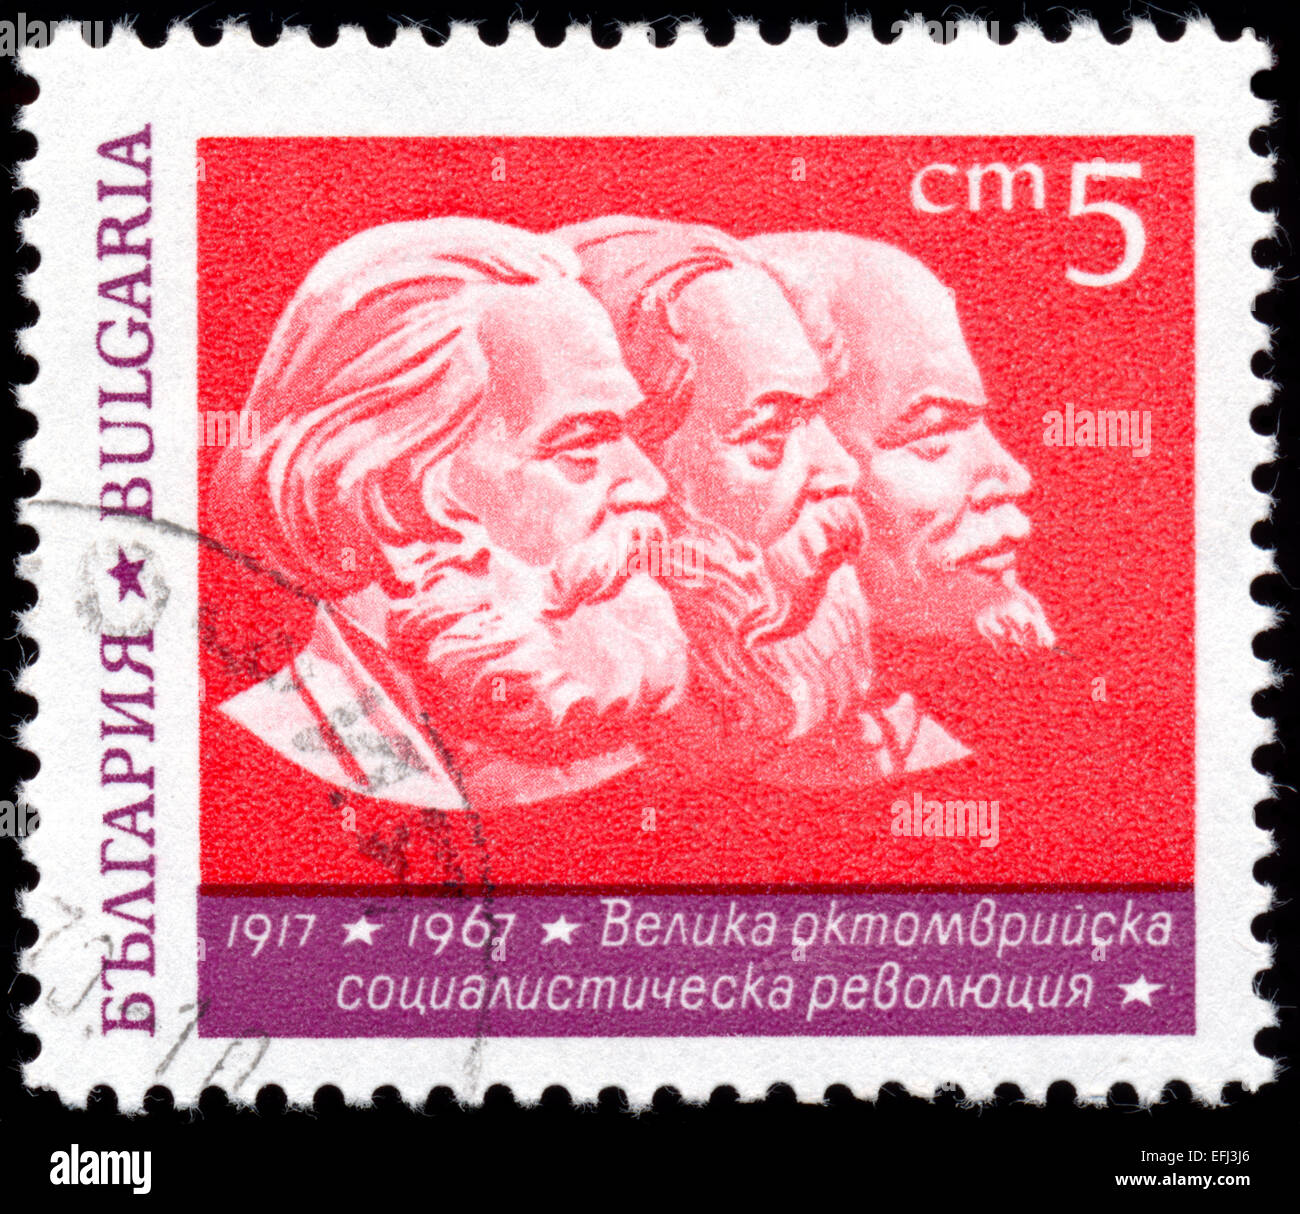 Bulgaria - Circa 1967: A stamp printed in the Bulgaria shows Marx, Engels, Lenin Stock Photo